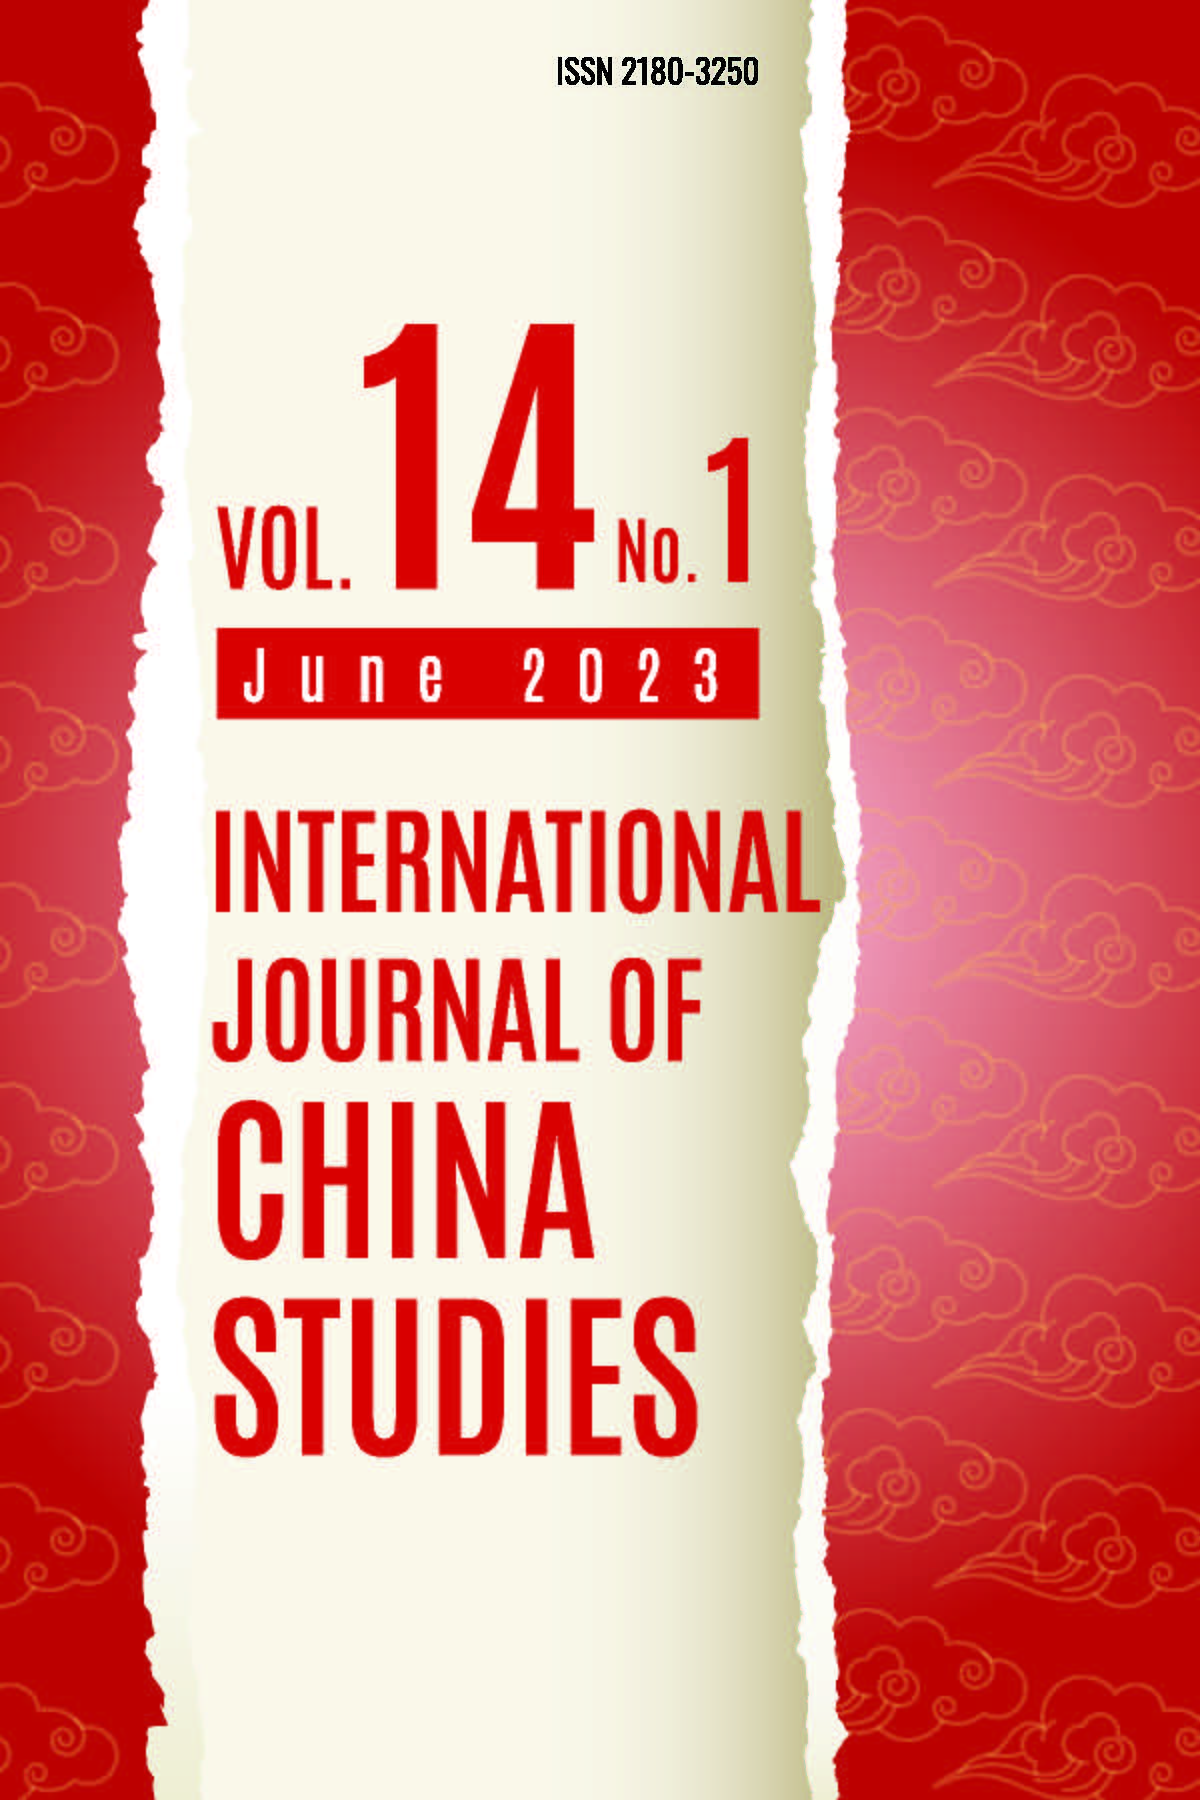 					View International Journal of China Studies Vol.14 No.1 June 2023
				